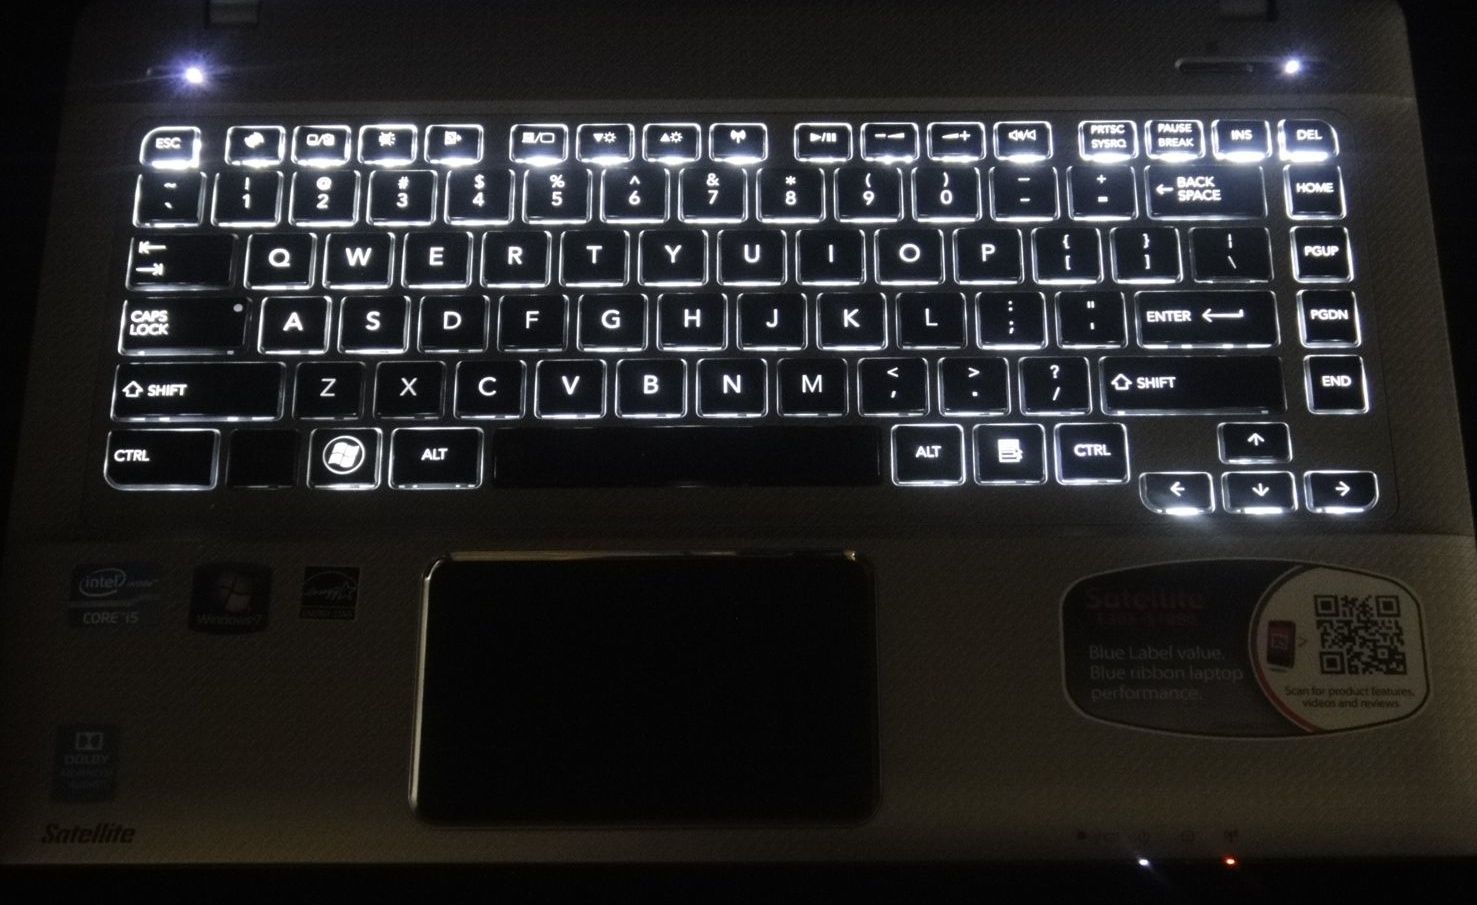 toshiba laptop with backlit keyboard